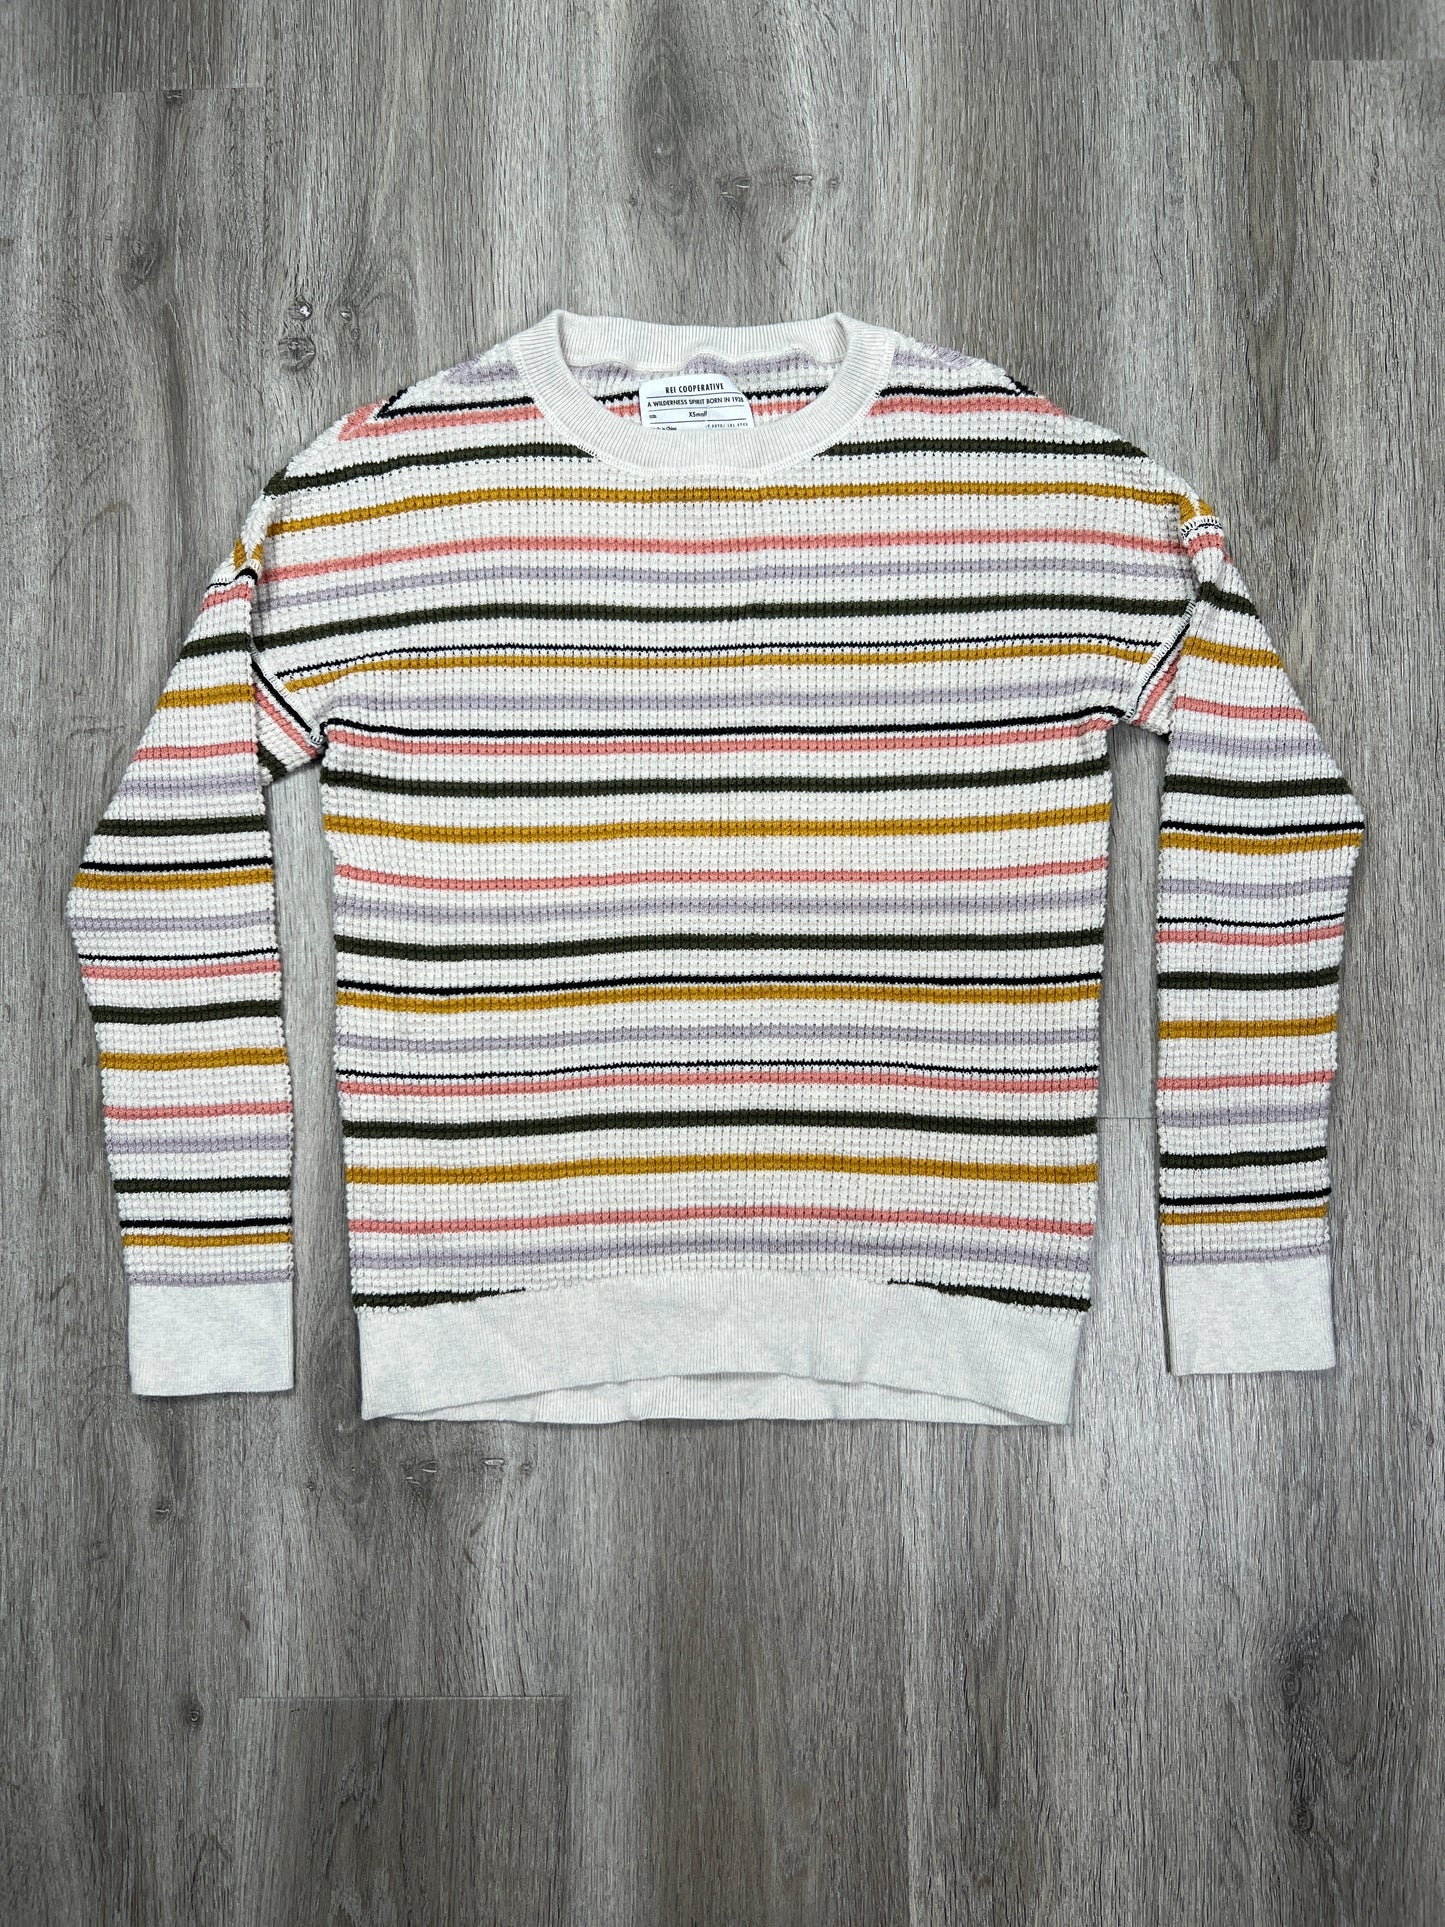 Striped Pattern Sweater Rei, Size Xs